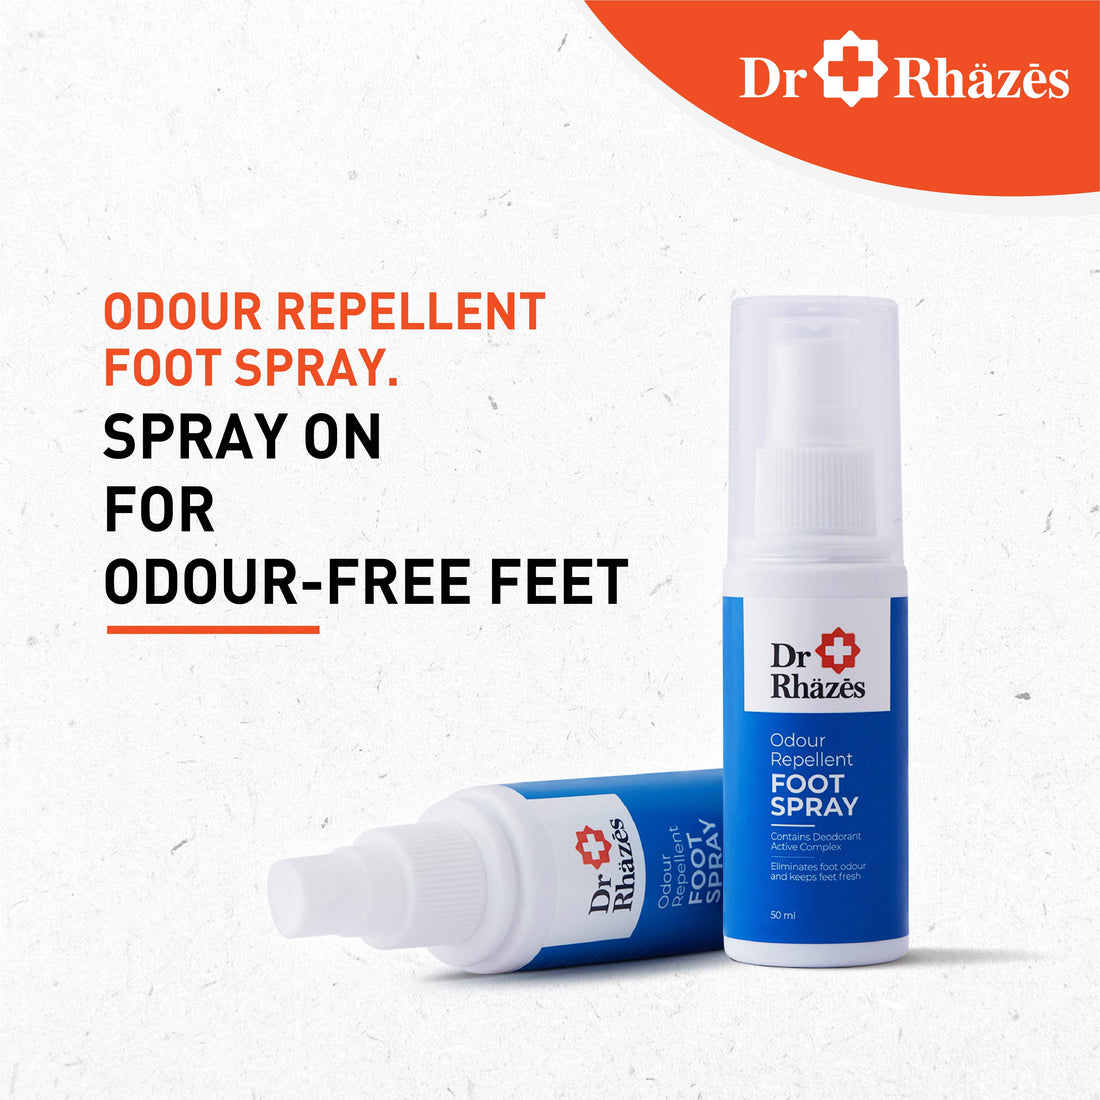 Dr Rhazes Odour Repellent Foot Spray (50ml)